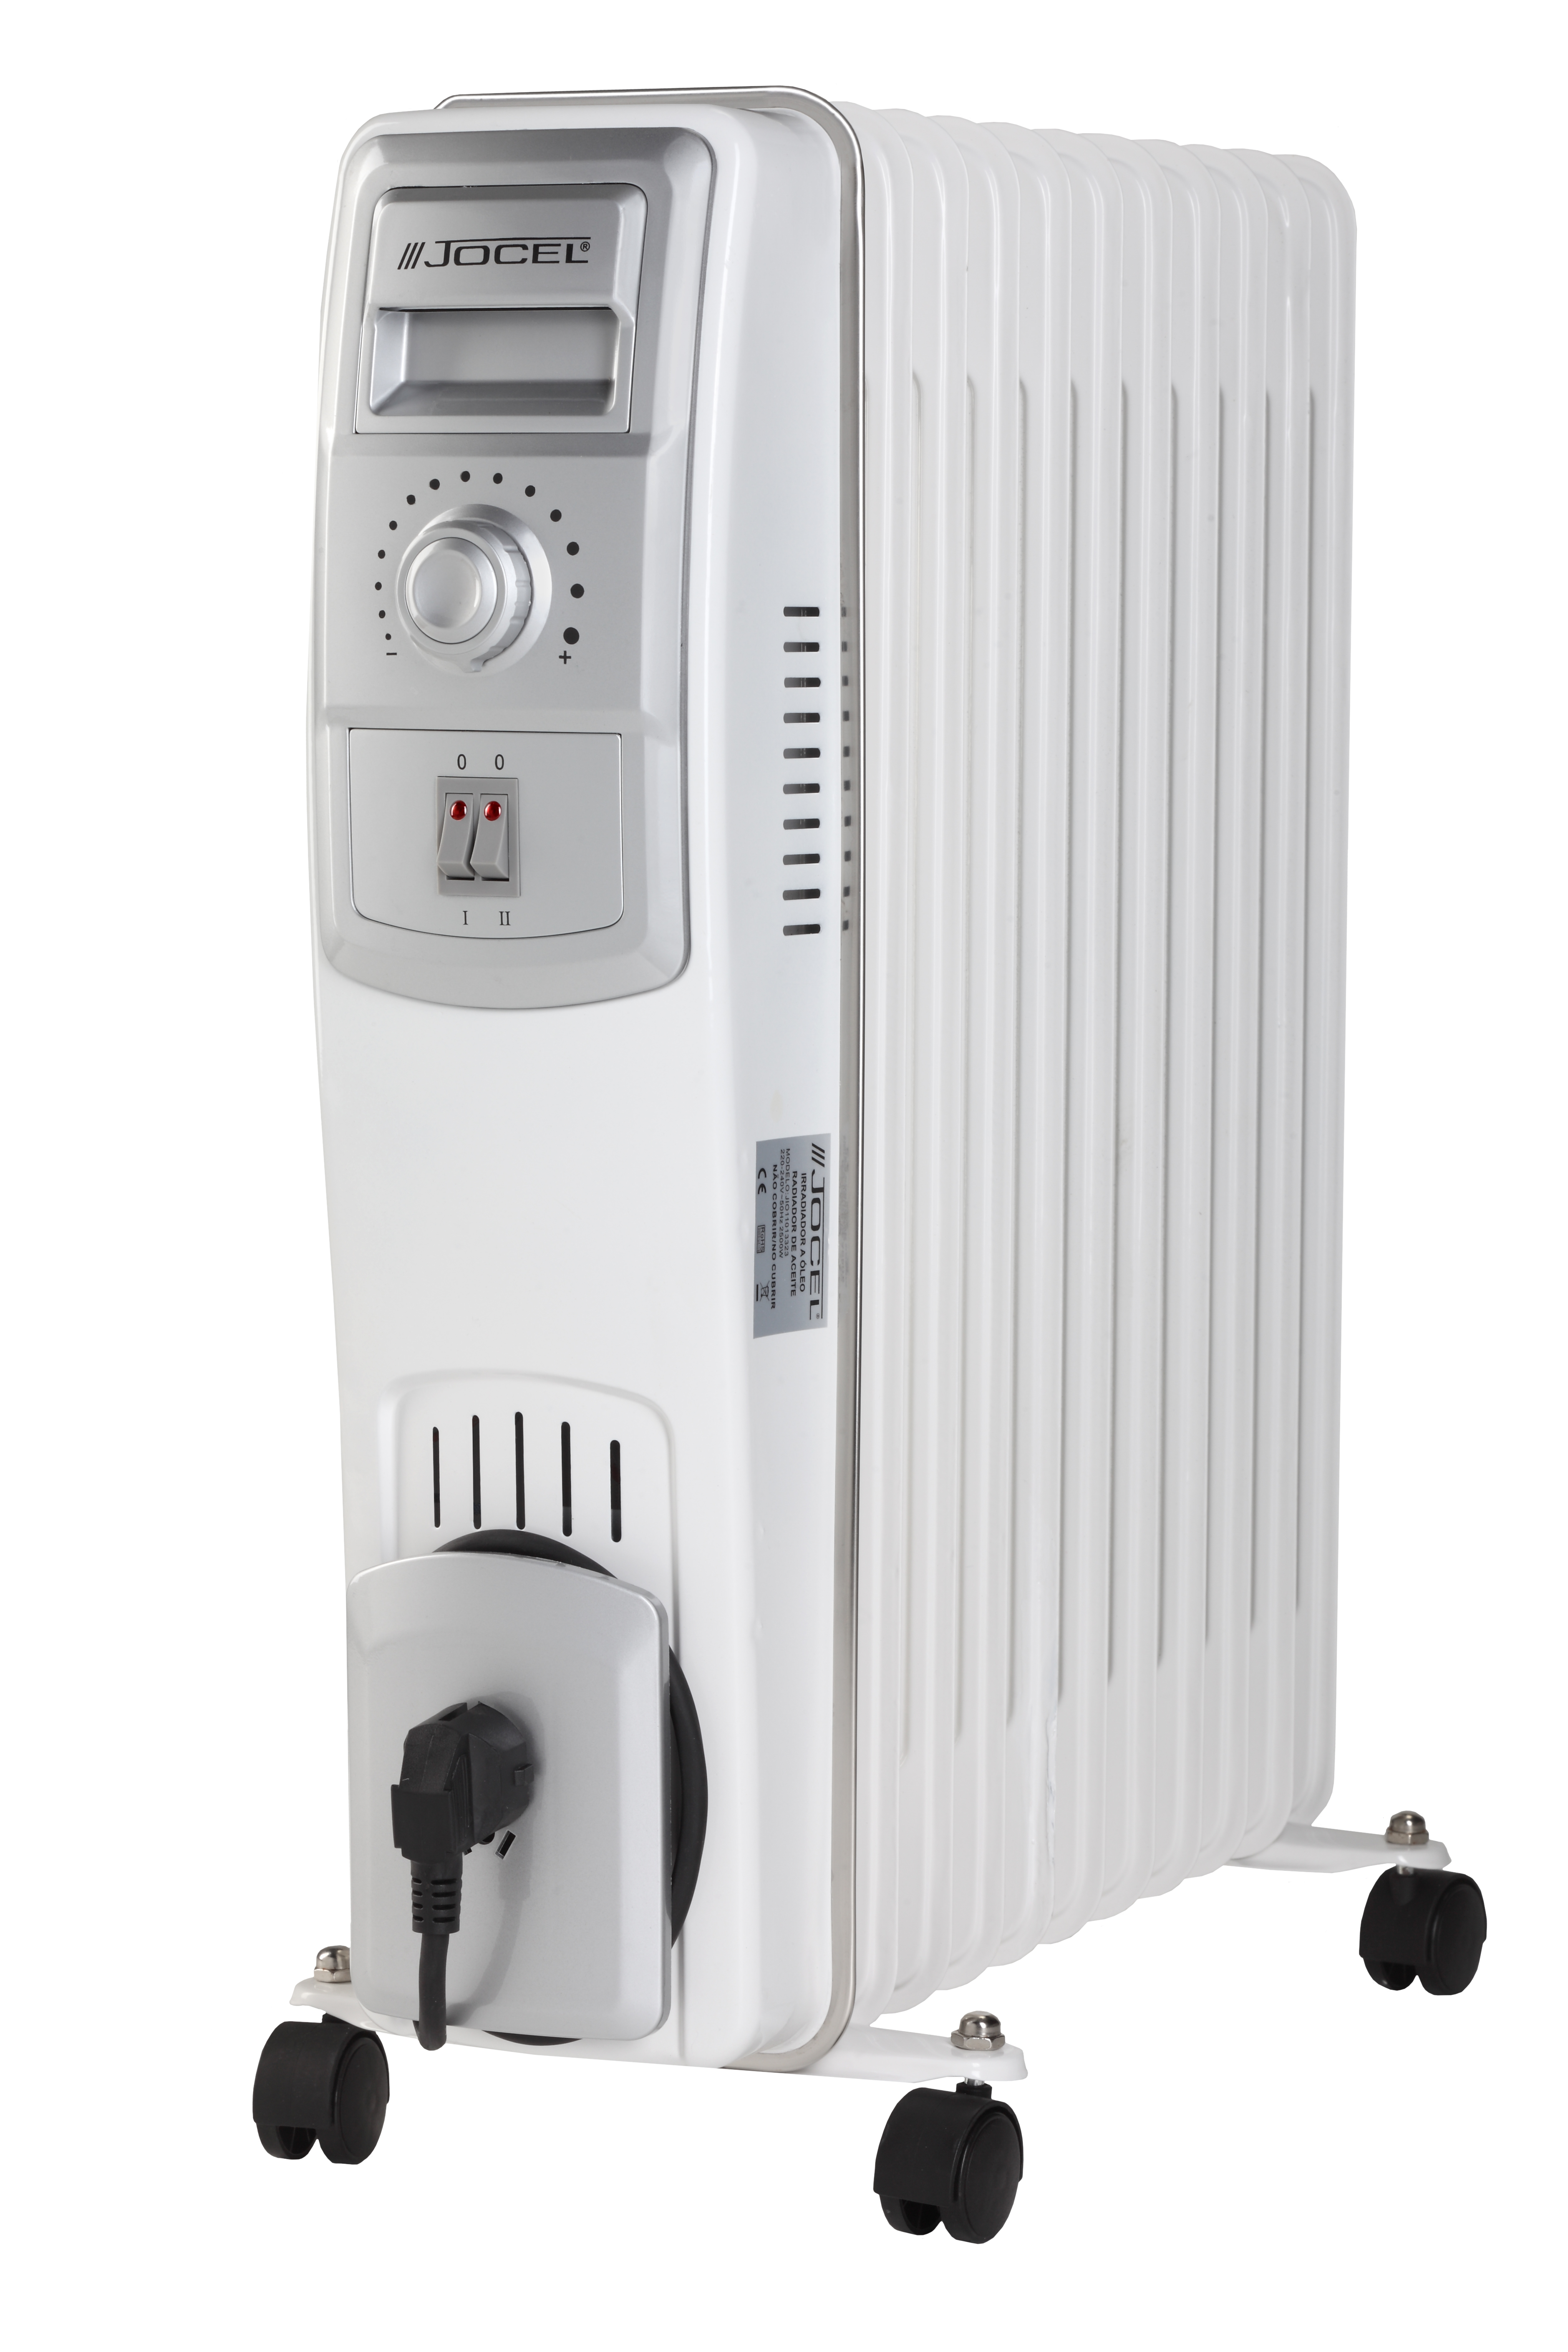 Radiador Jocel Ji011 013323 potencia 2500w sistema de aceite termostato ajustable 2500 blanco y jio11 11